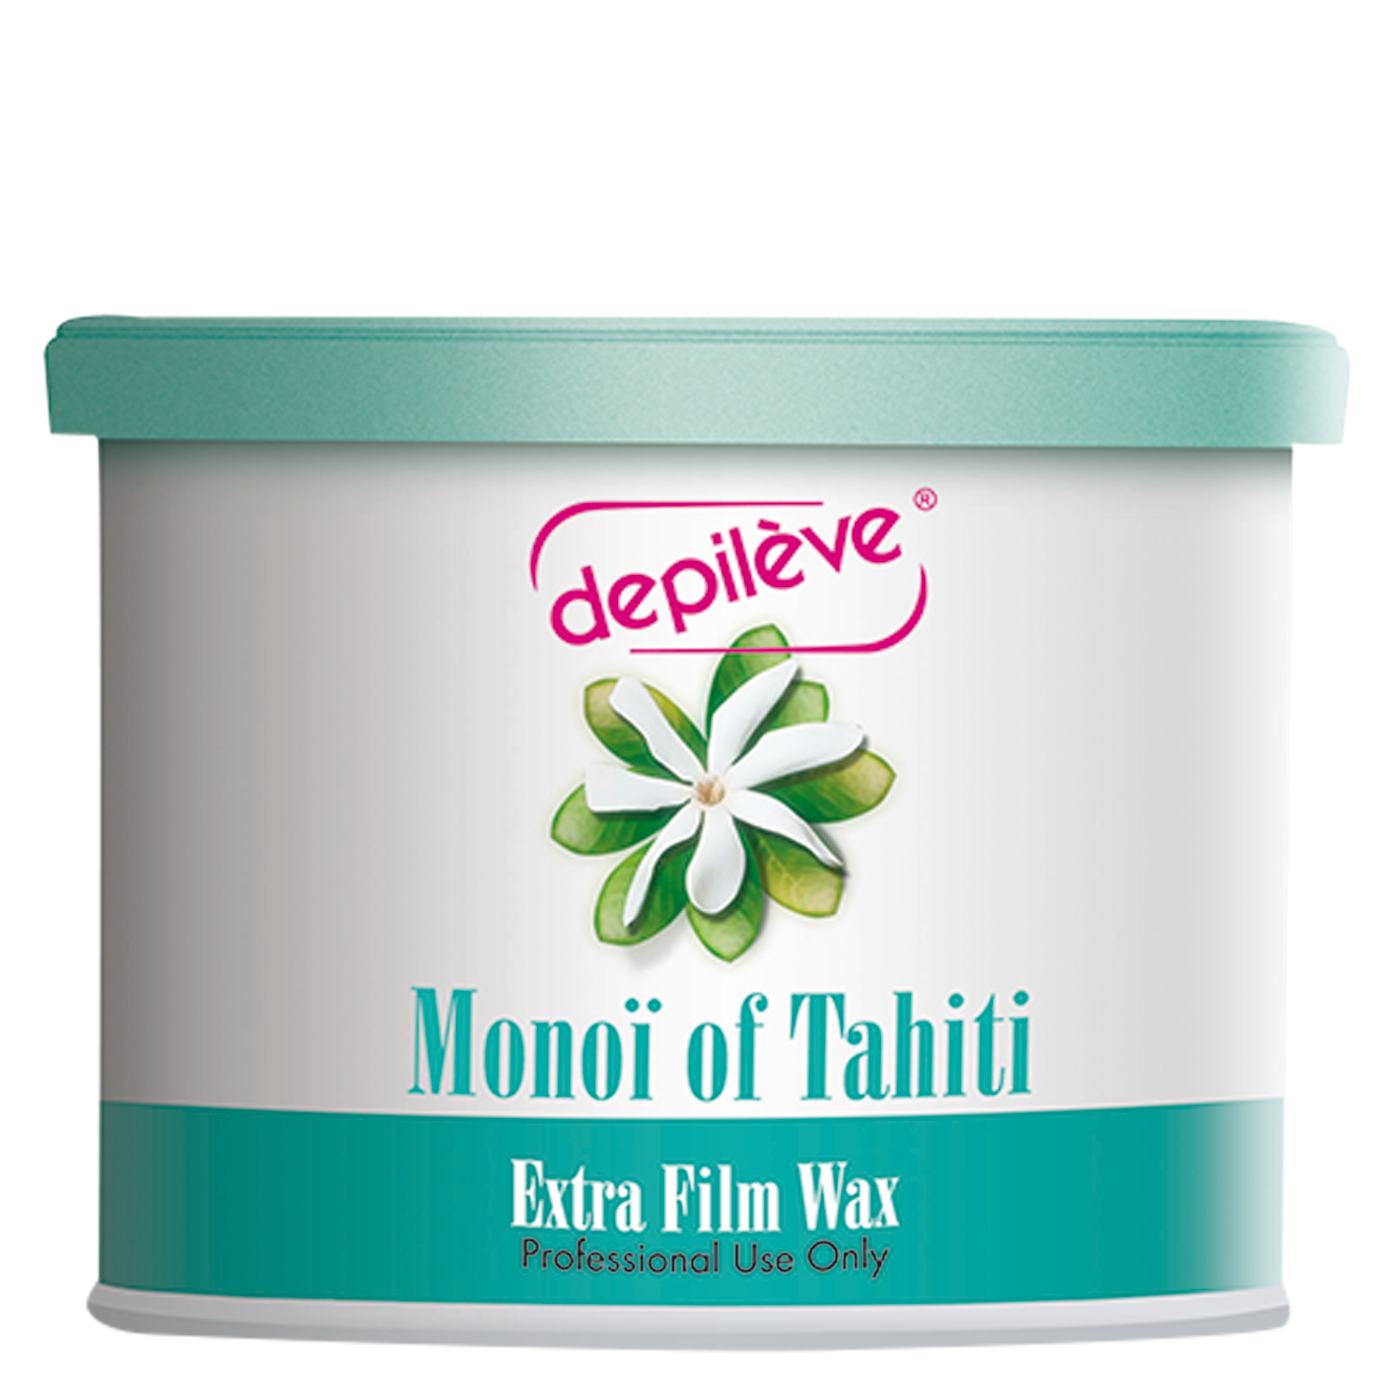 Monoi of Tahiti Extra Film Wax